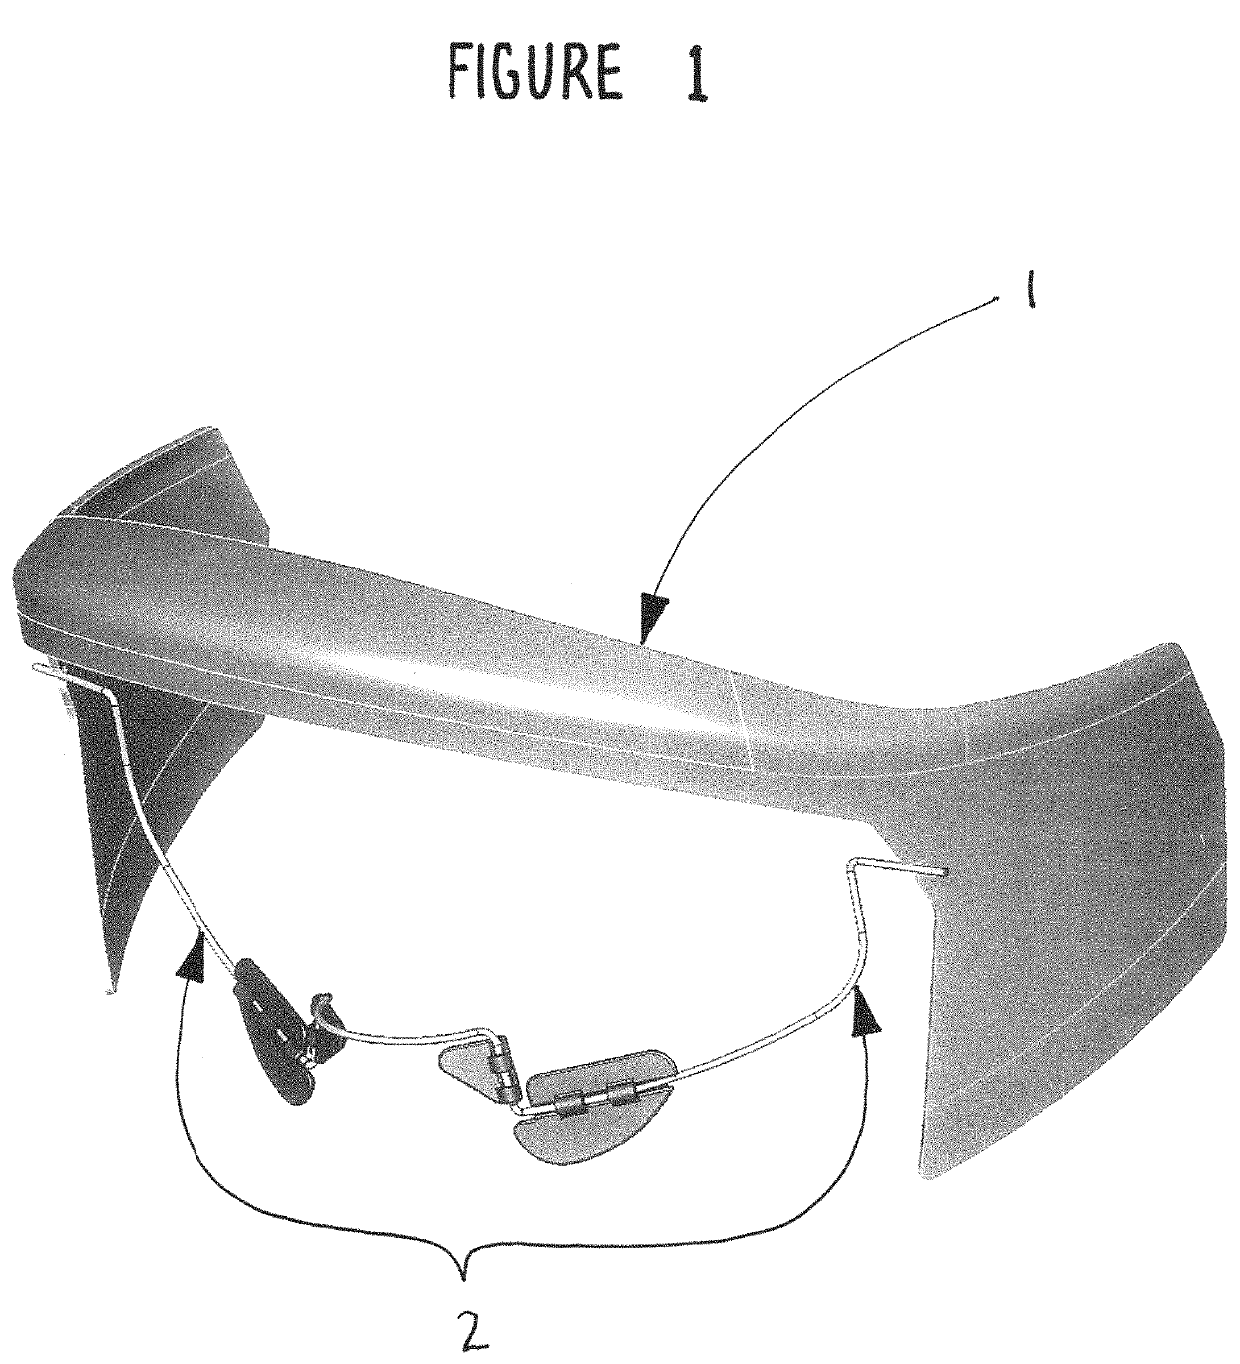 Suspension system for a new goggle frame platform